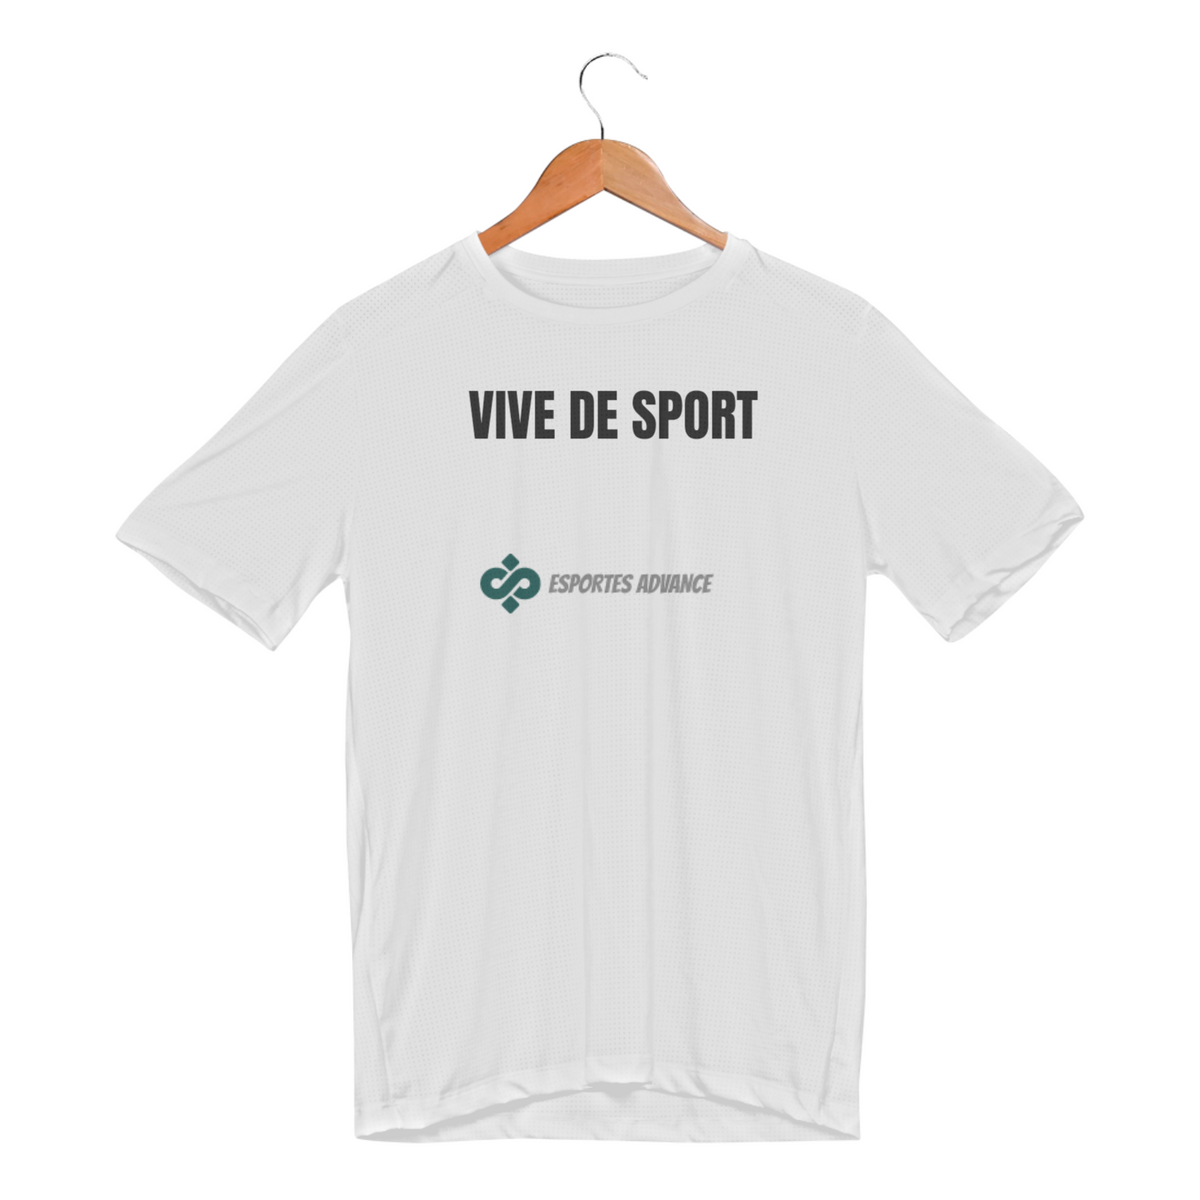 Nome do produto: Camiseta Esportes Advance